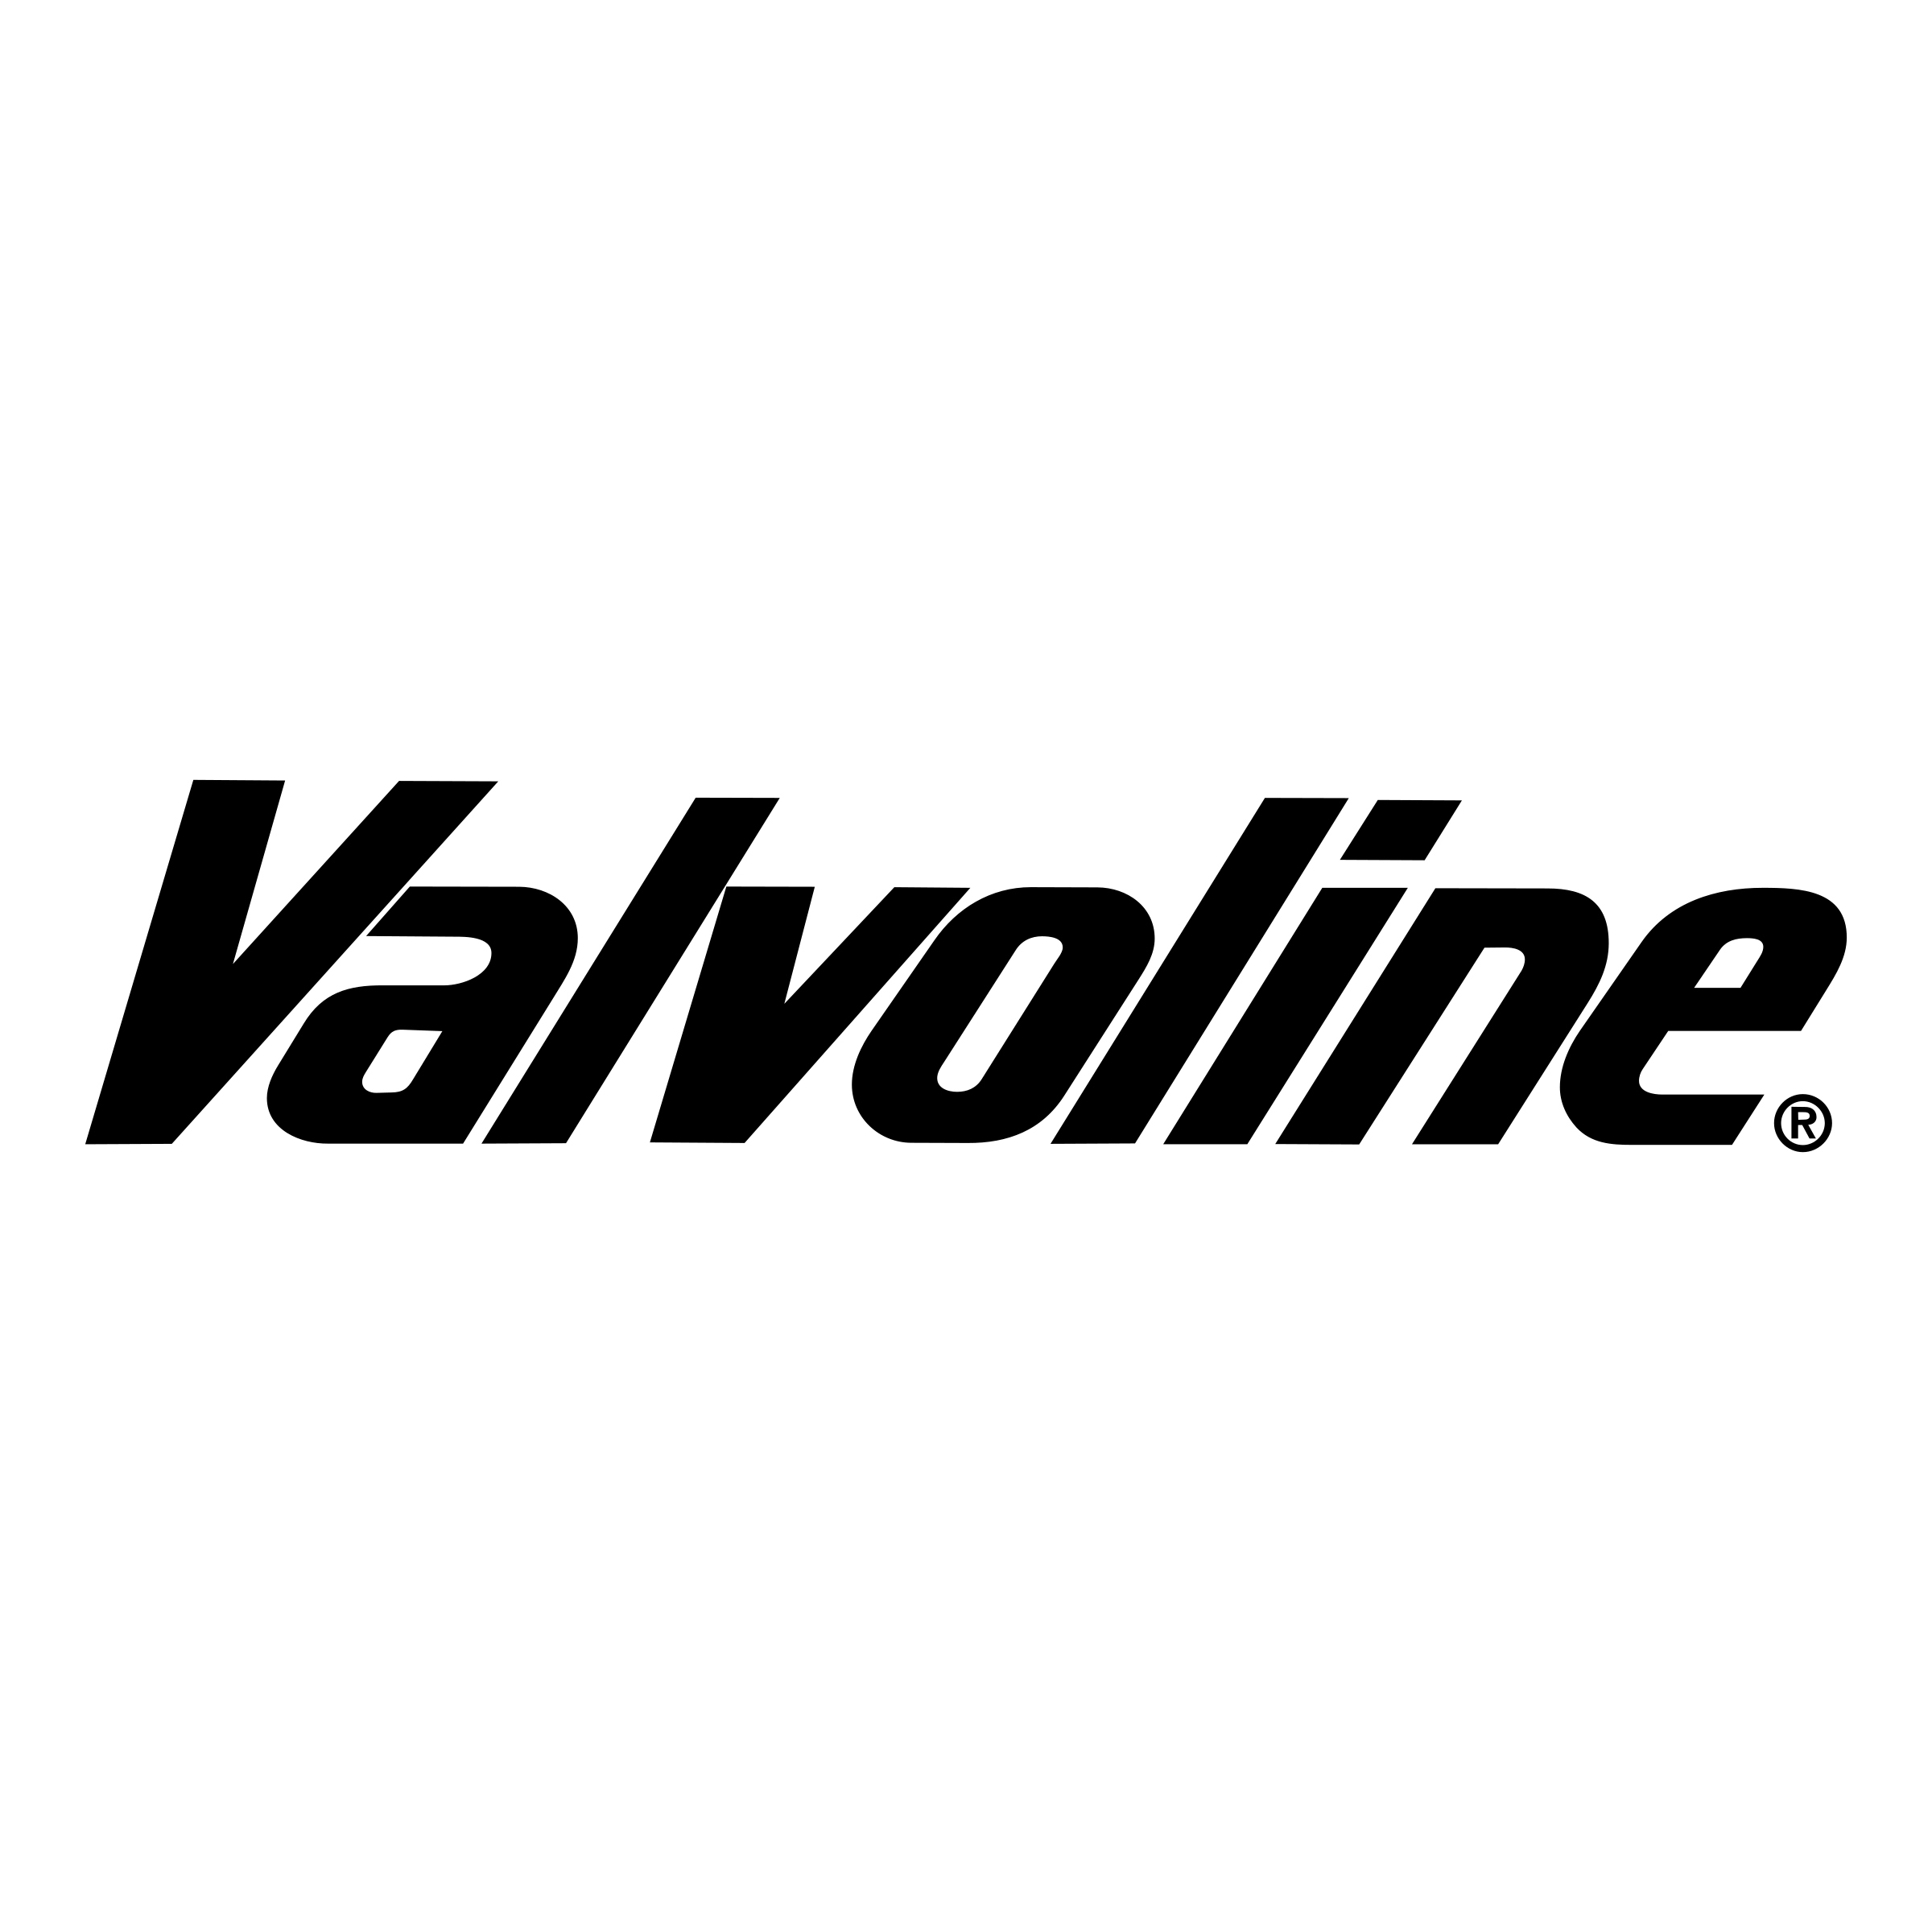 Valvoline Logo - Valvoline Logo PNG Transparent & SVG Vector - Freebie Supply